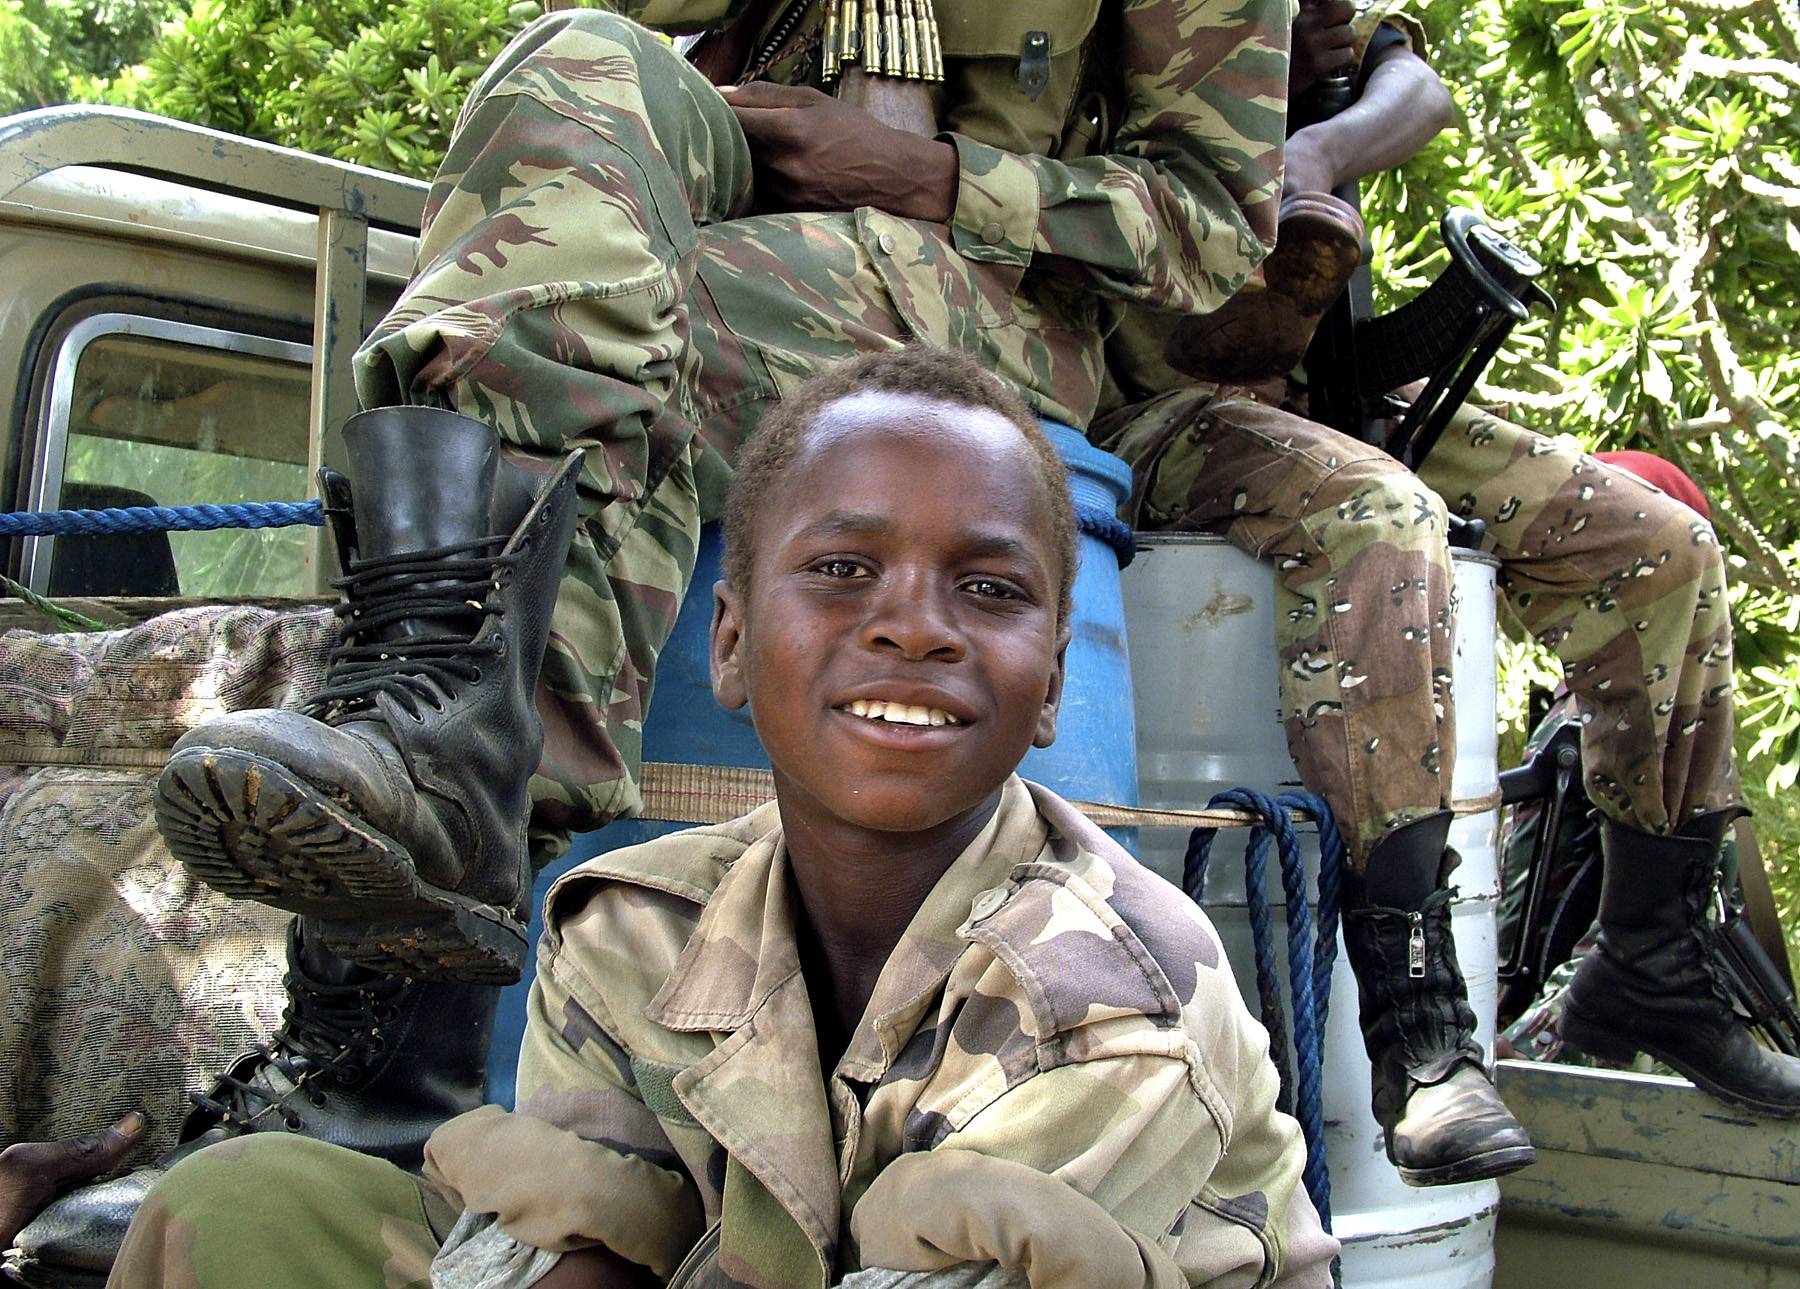 Child soldiers U.N. CAR